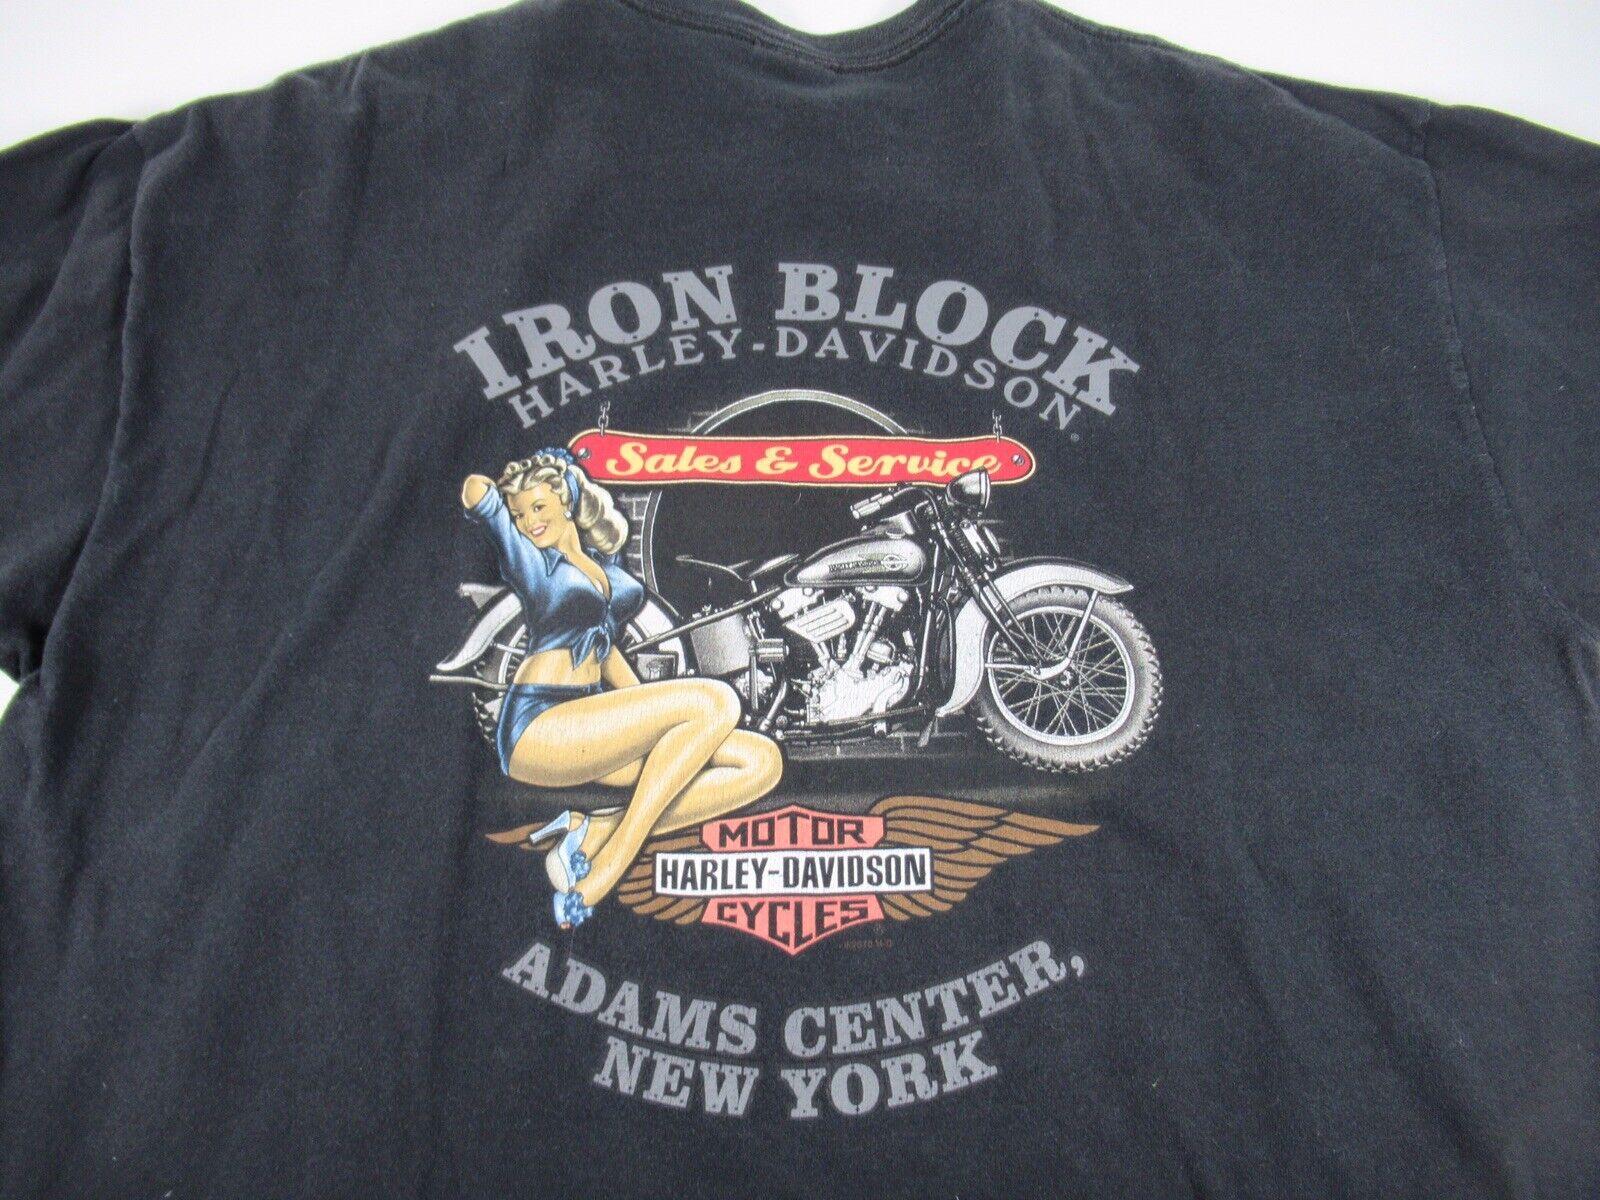 Harley Davidson Legendary Motor 1 Cycles Iron Block Black Sz 1XL New York A2